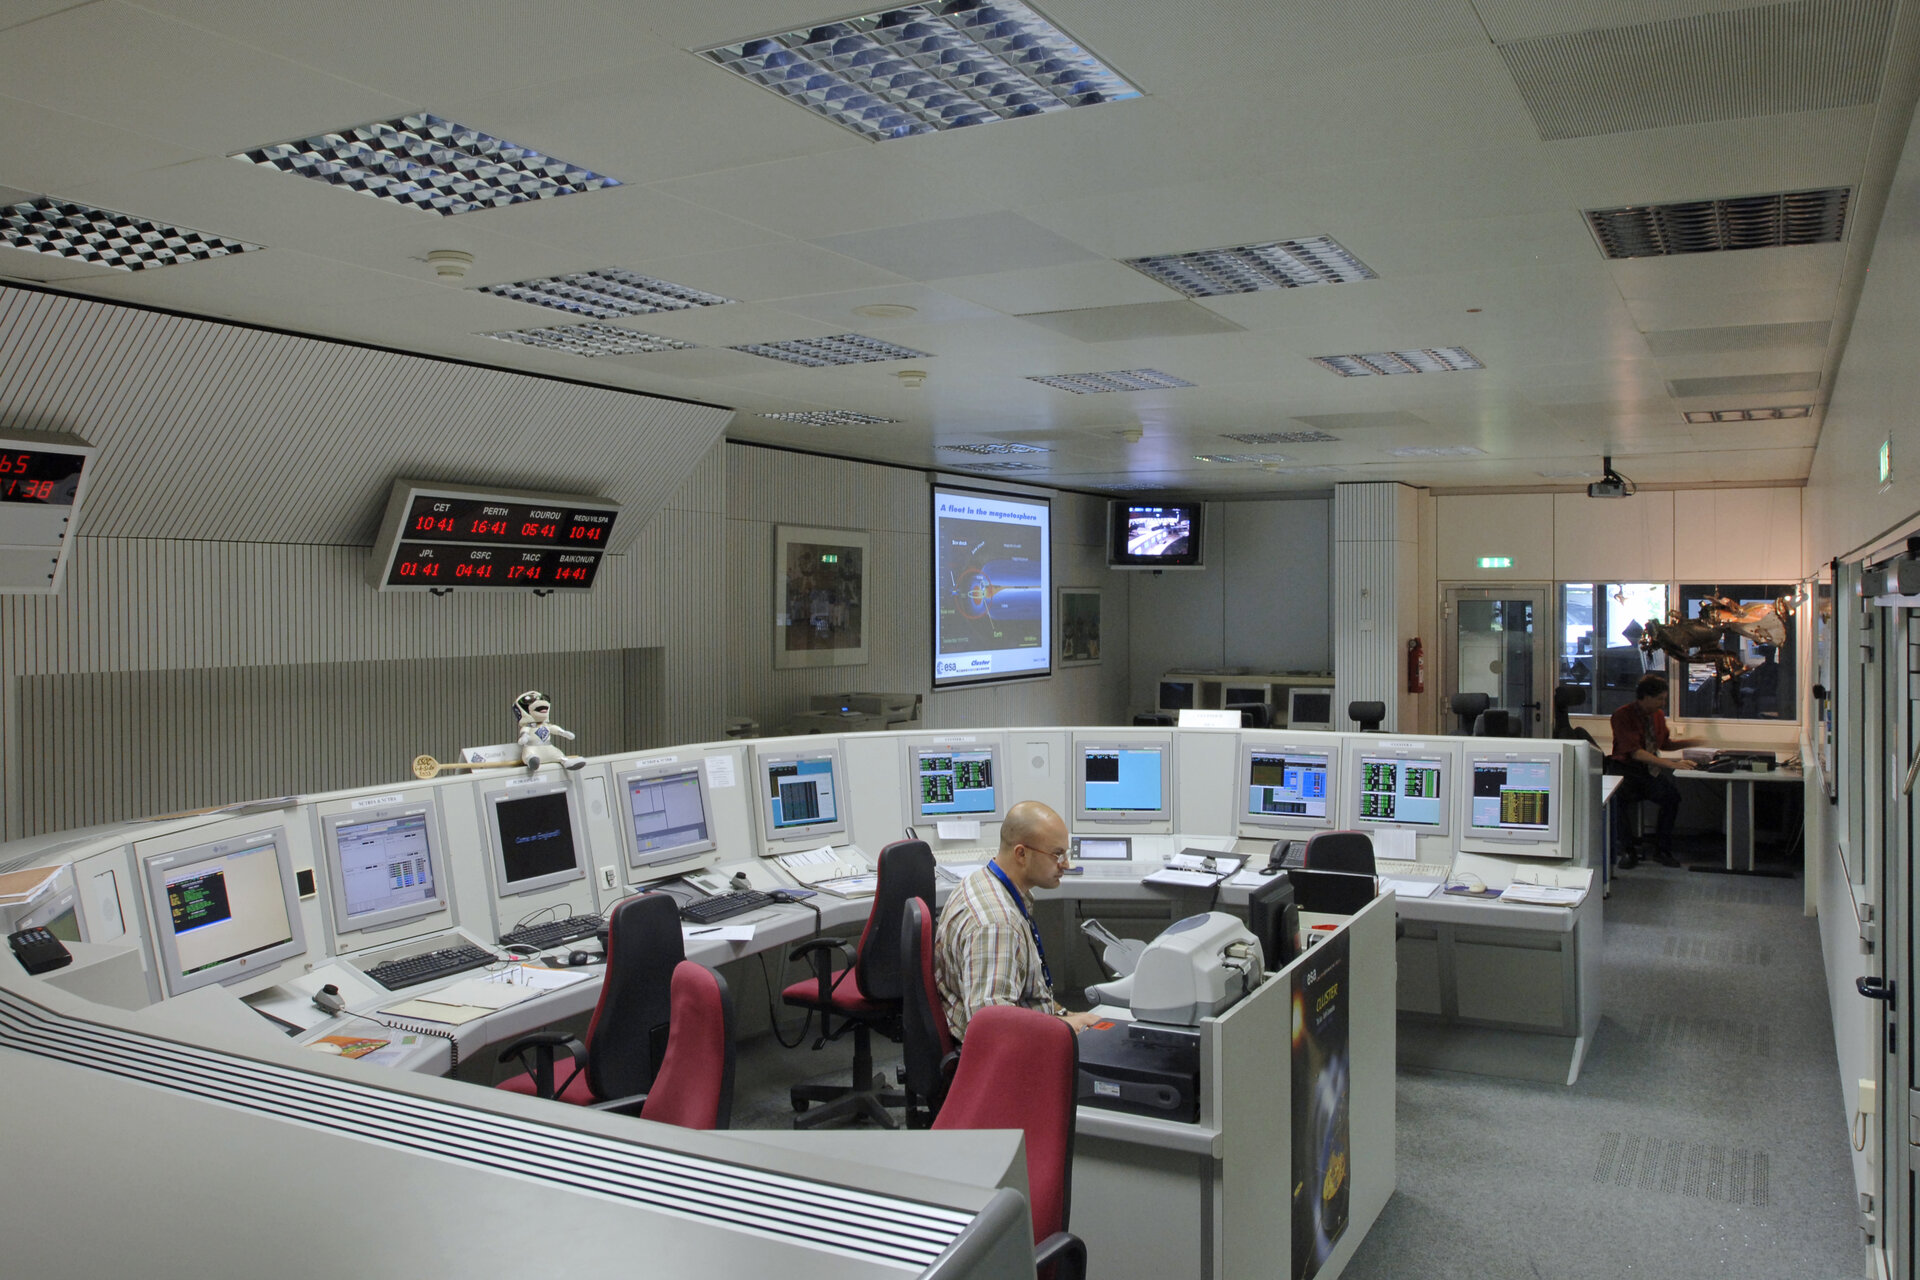 Engineers working in Cluster control room